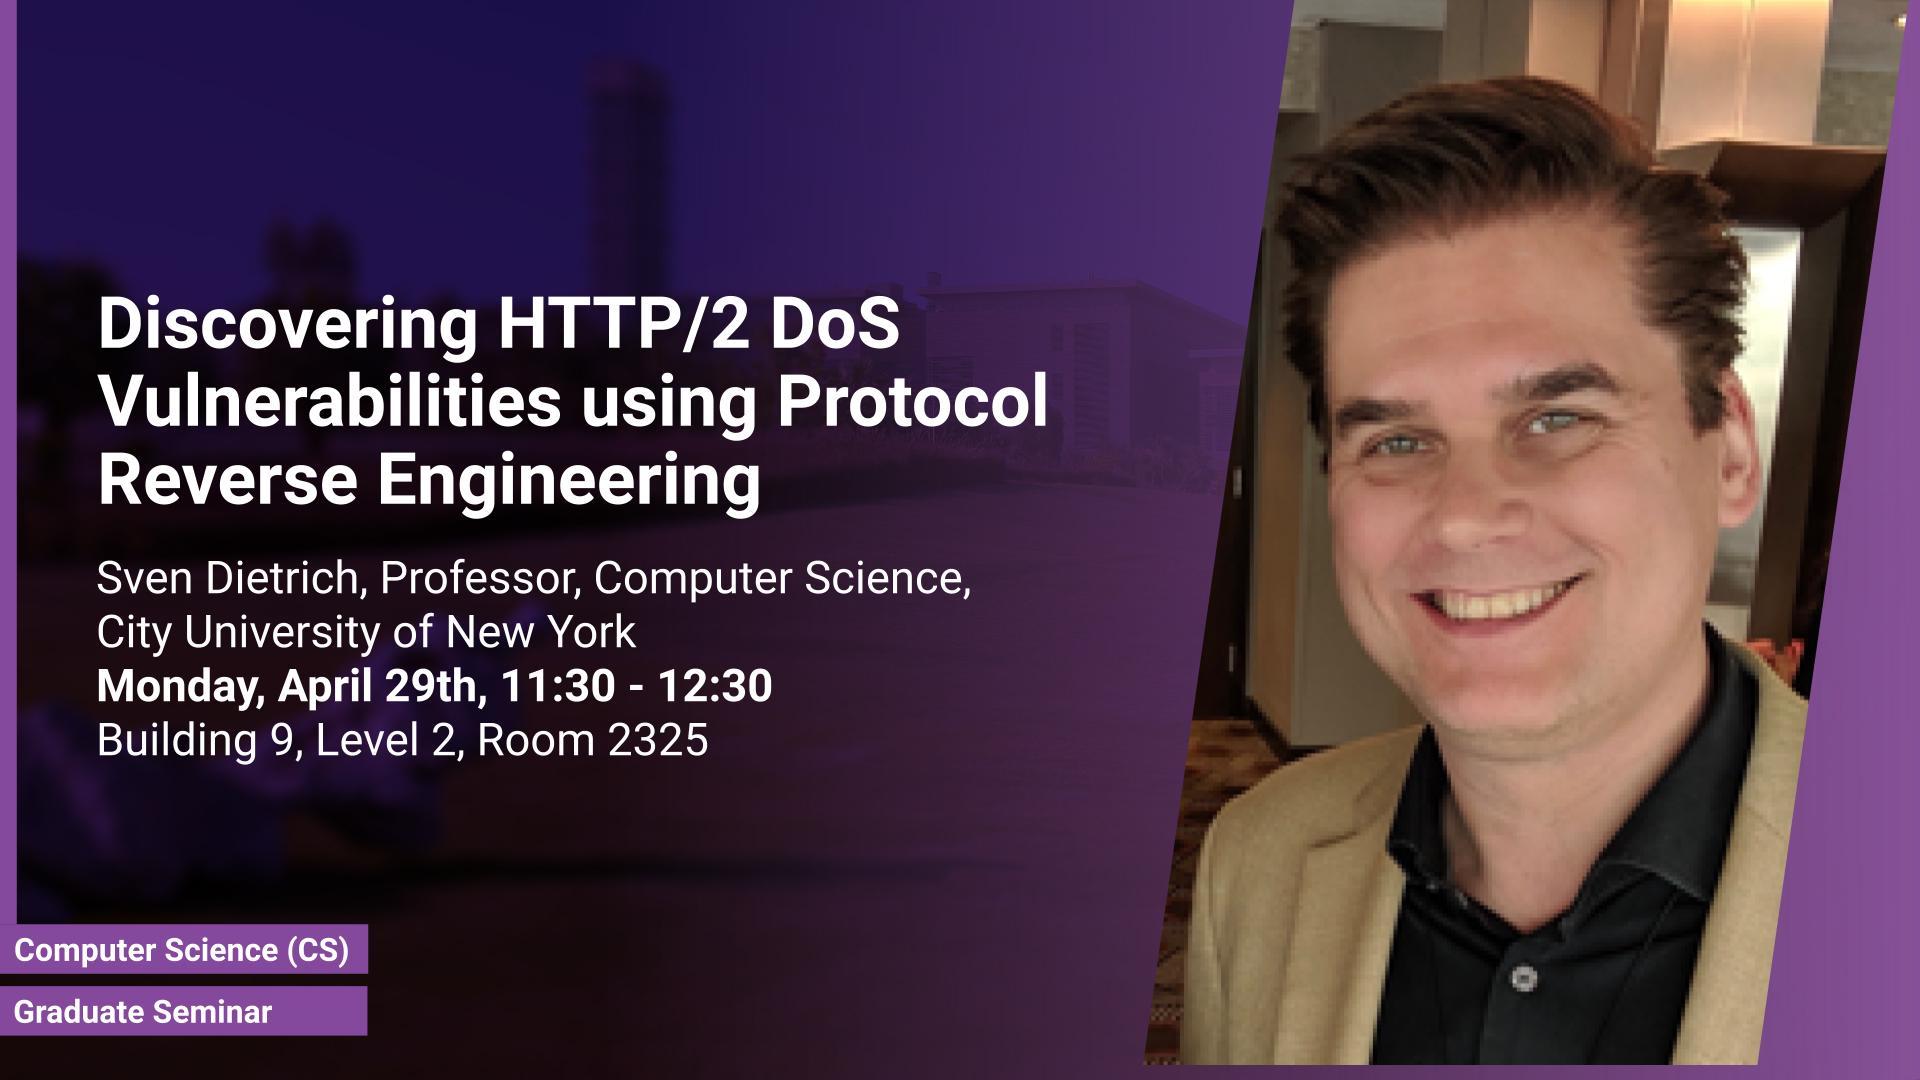 KAUST-CEMSE-CS-Graduate-Seminar-Sven-Dietrich-Discovering-HTTP_2 DoS-Vulnerabilities-using-Protocol-Reverse-Engineering.jpg